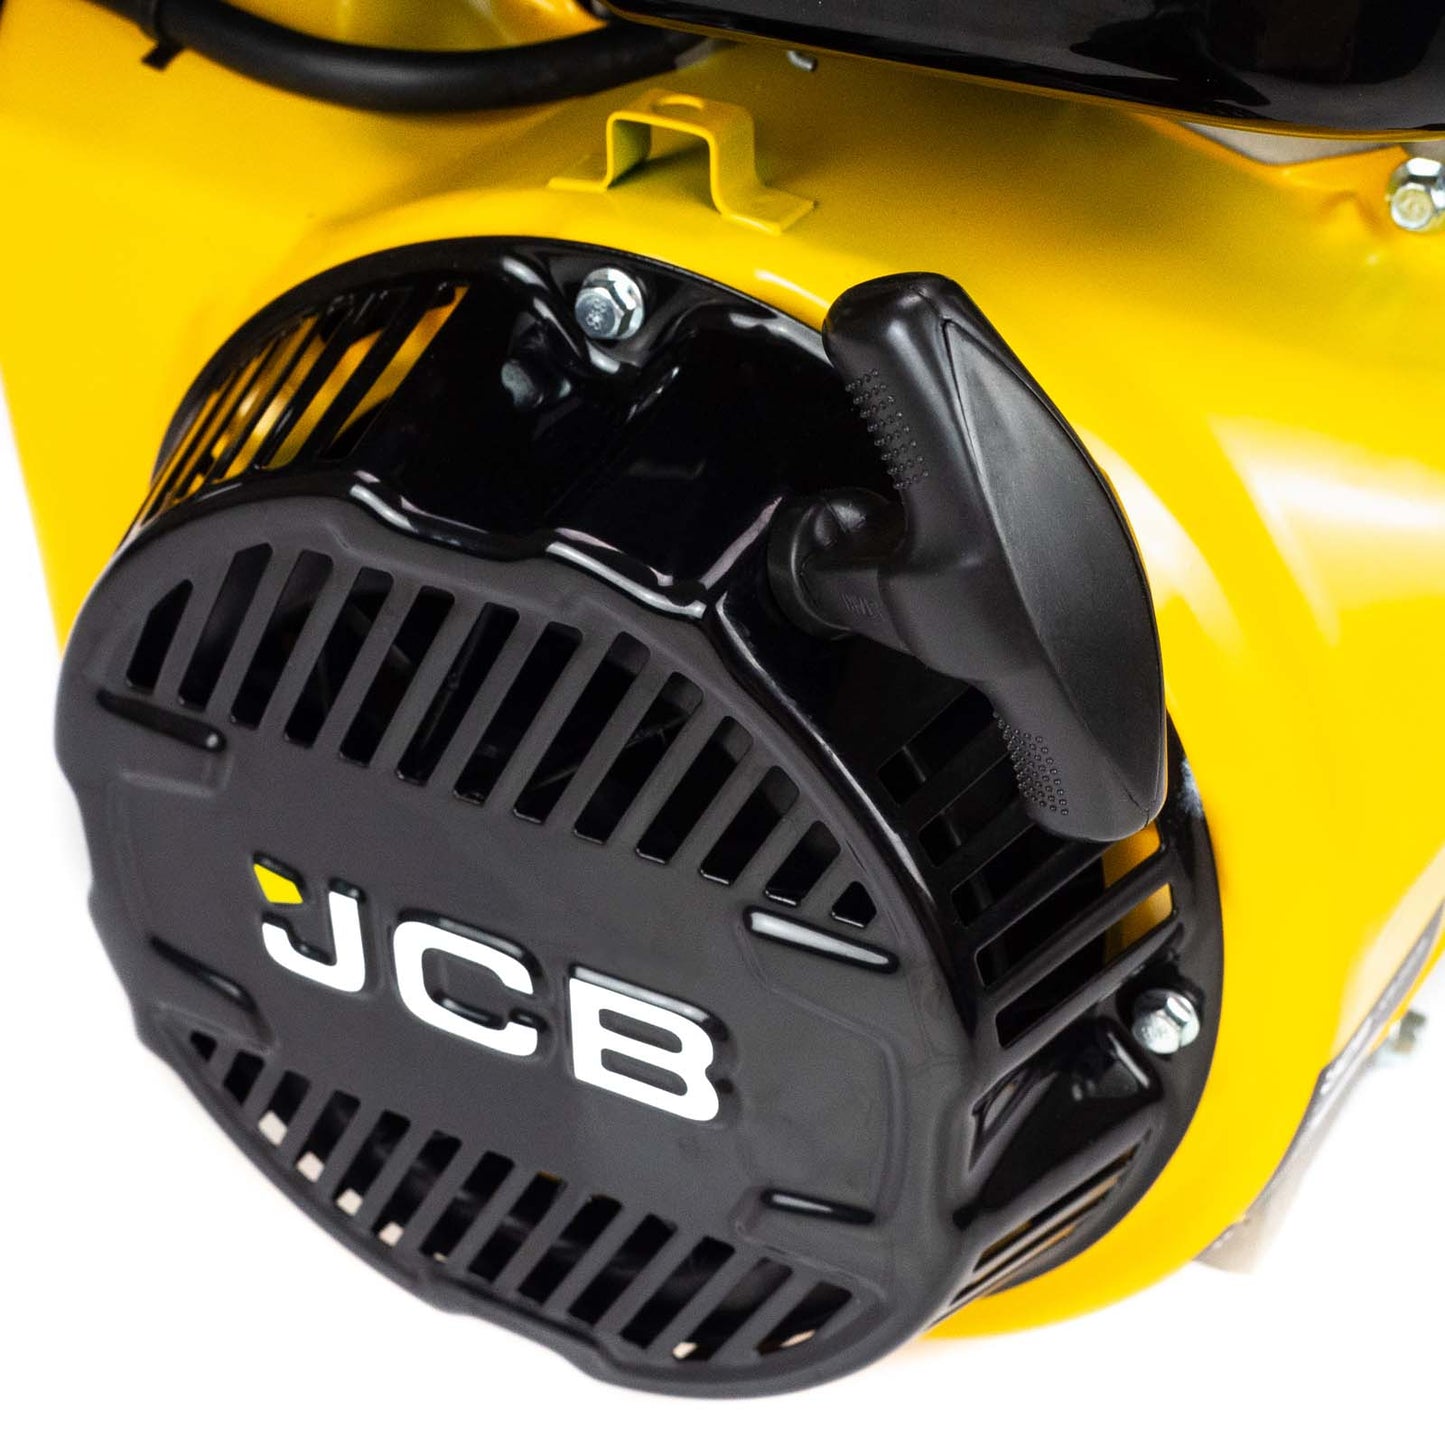 JCB 4 Stroke Horizontal Straight Shaft Electric Start Petrol Engine 457cc JCB-E460PE